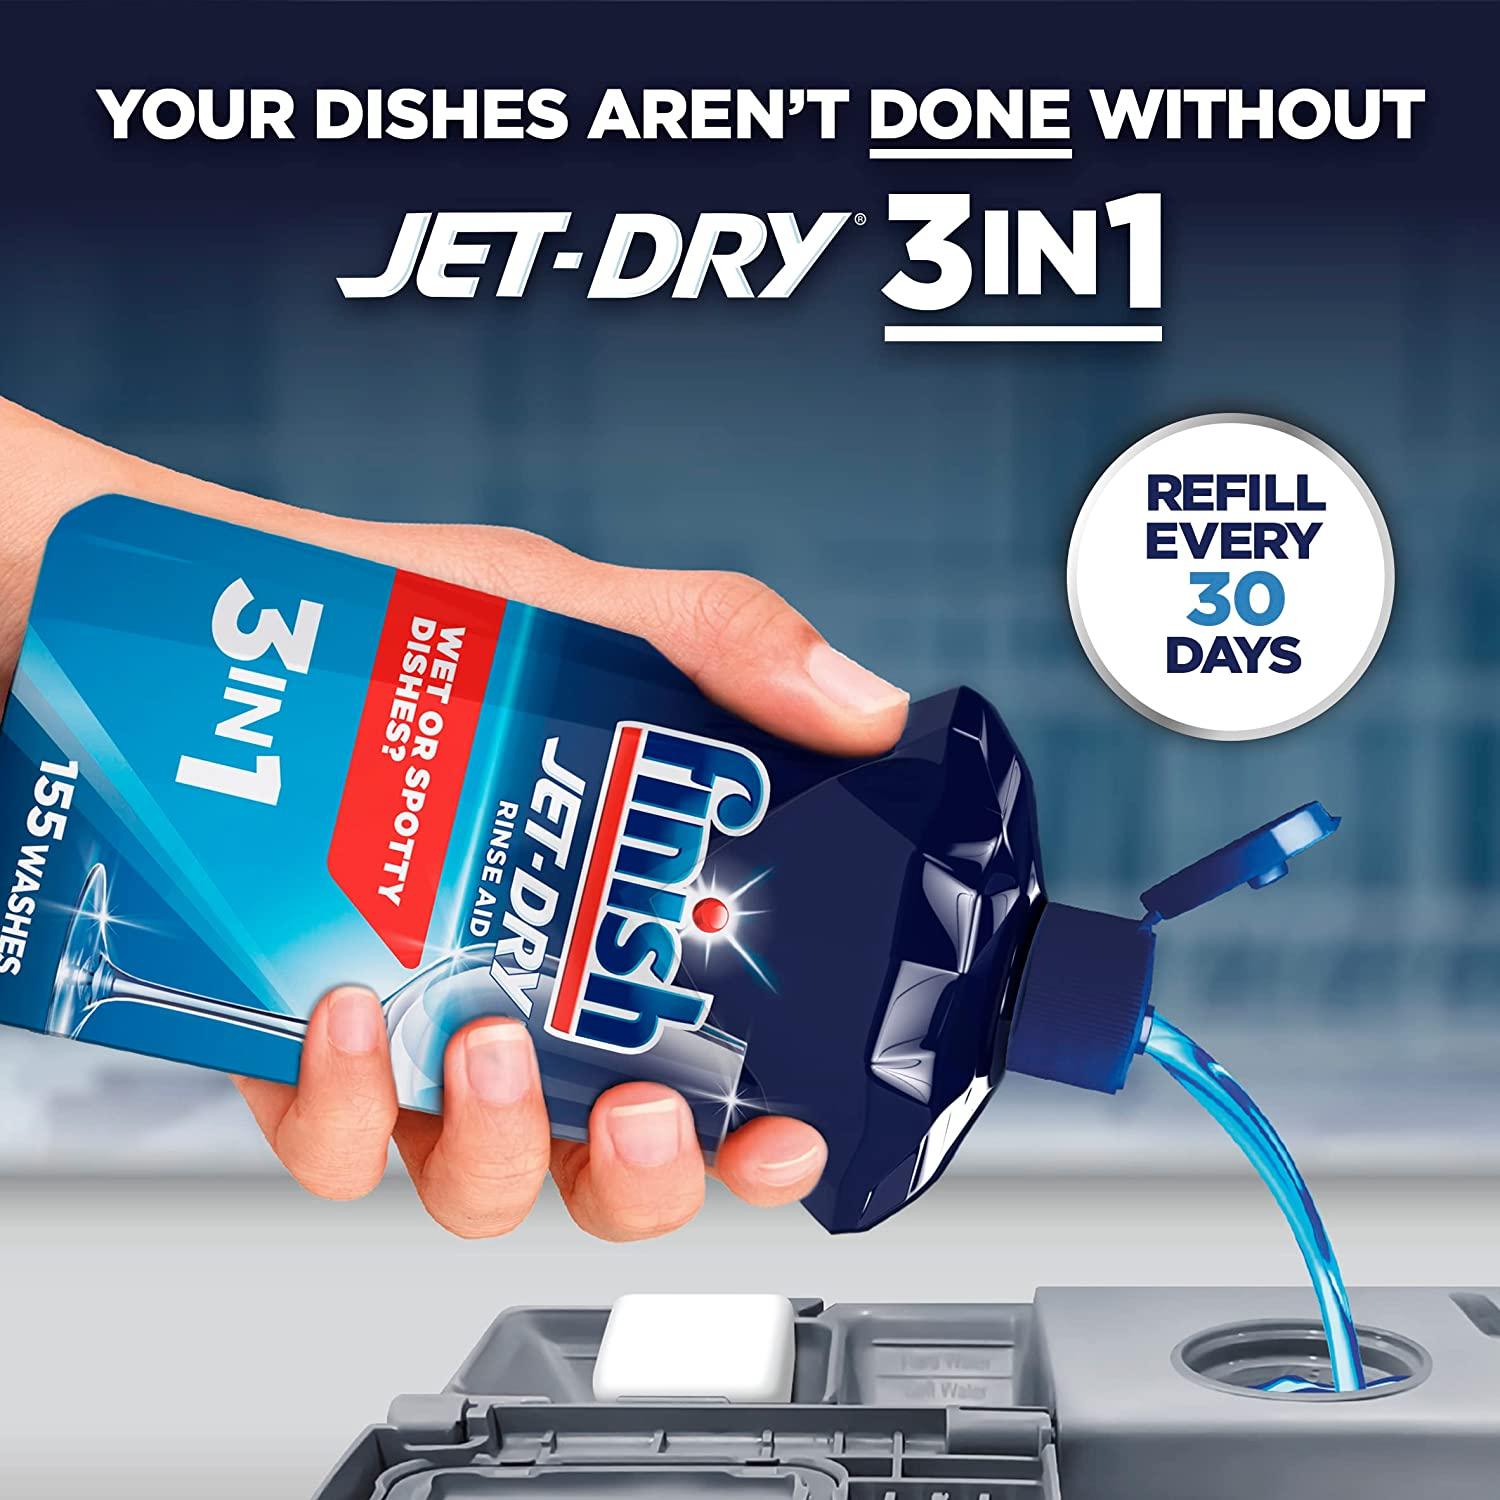 Finish Jet Dry Rinse Aid for Dishwashers